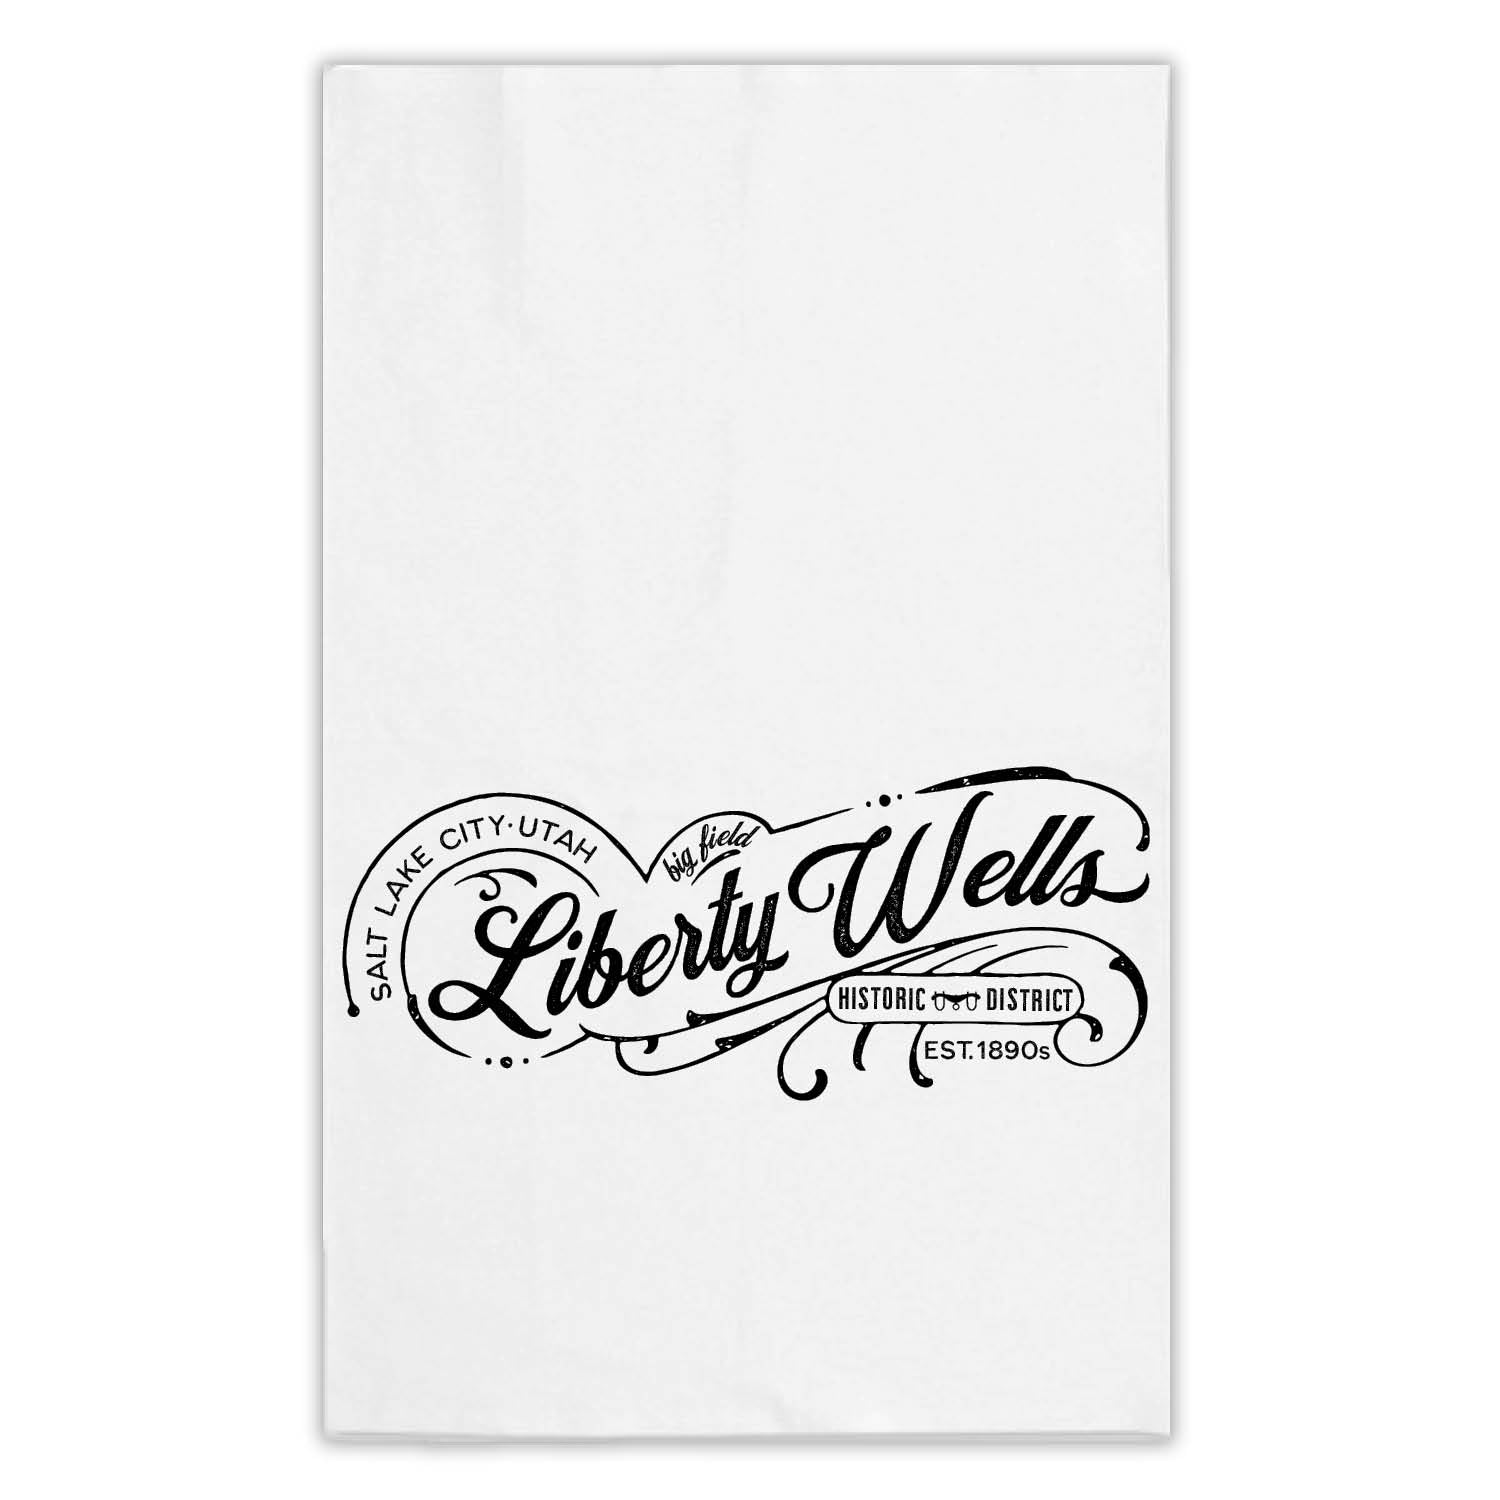 Liberty Wells Salt Lake City neighborhood swirly script design printed on a white tea towel